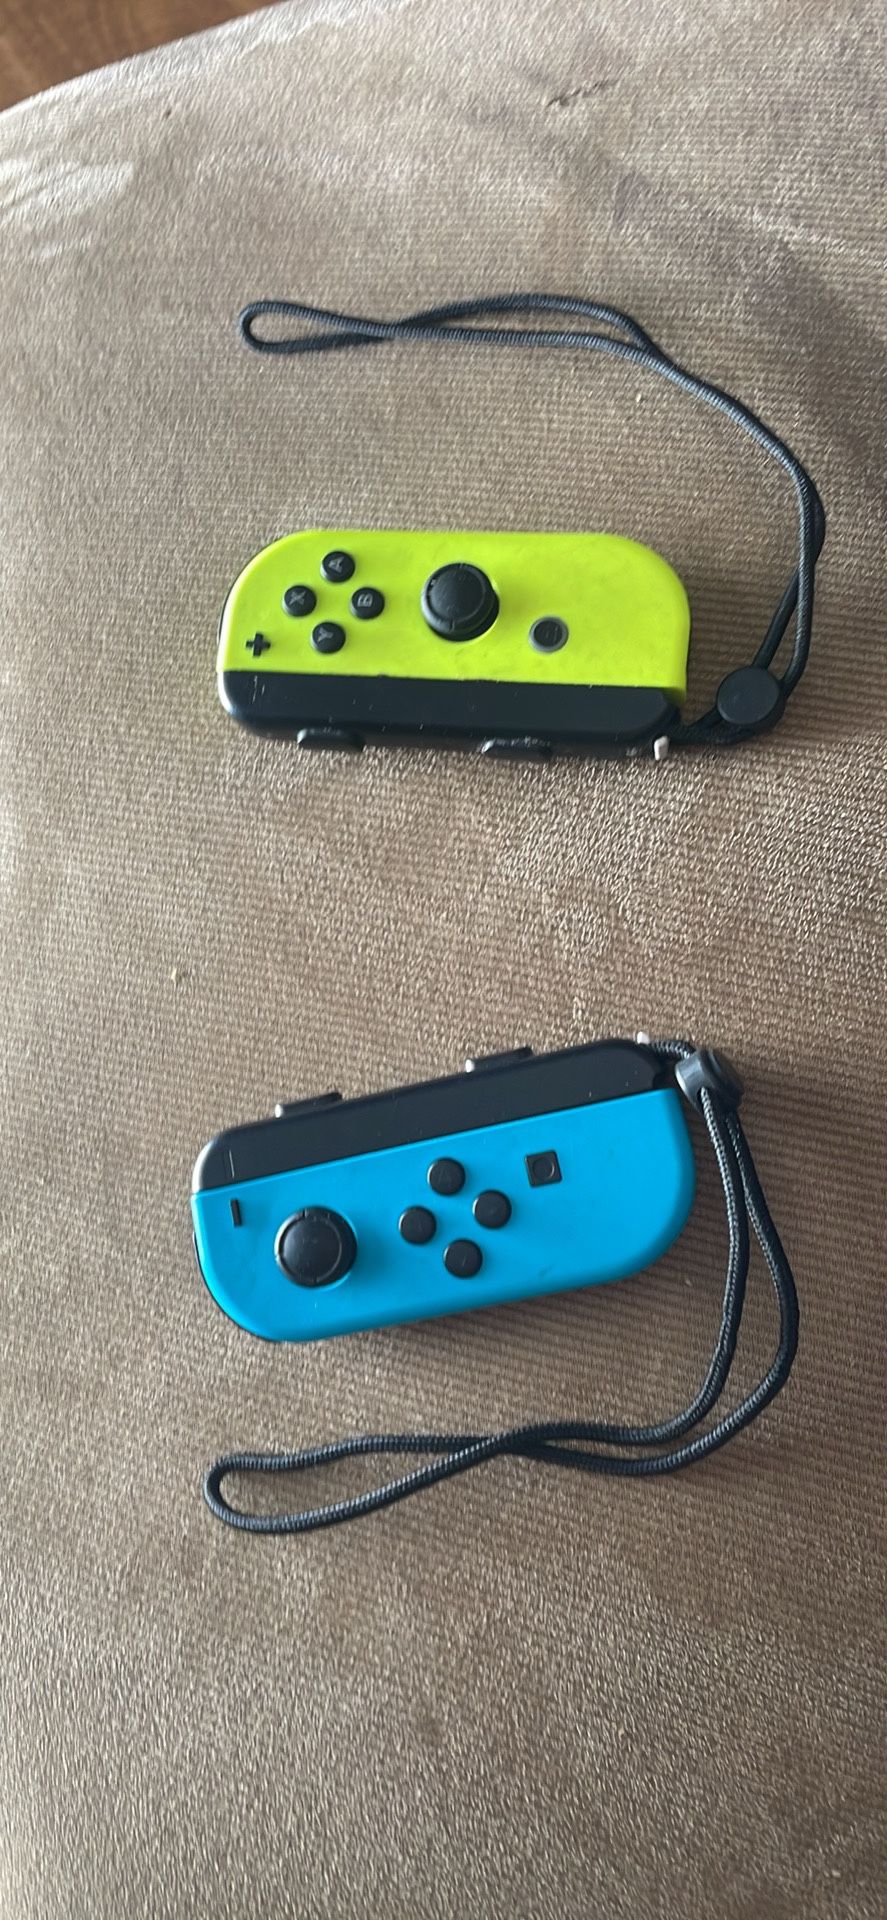 Nintendo Switch Joycon Controllers